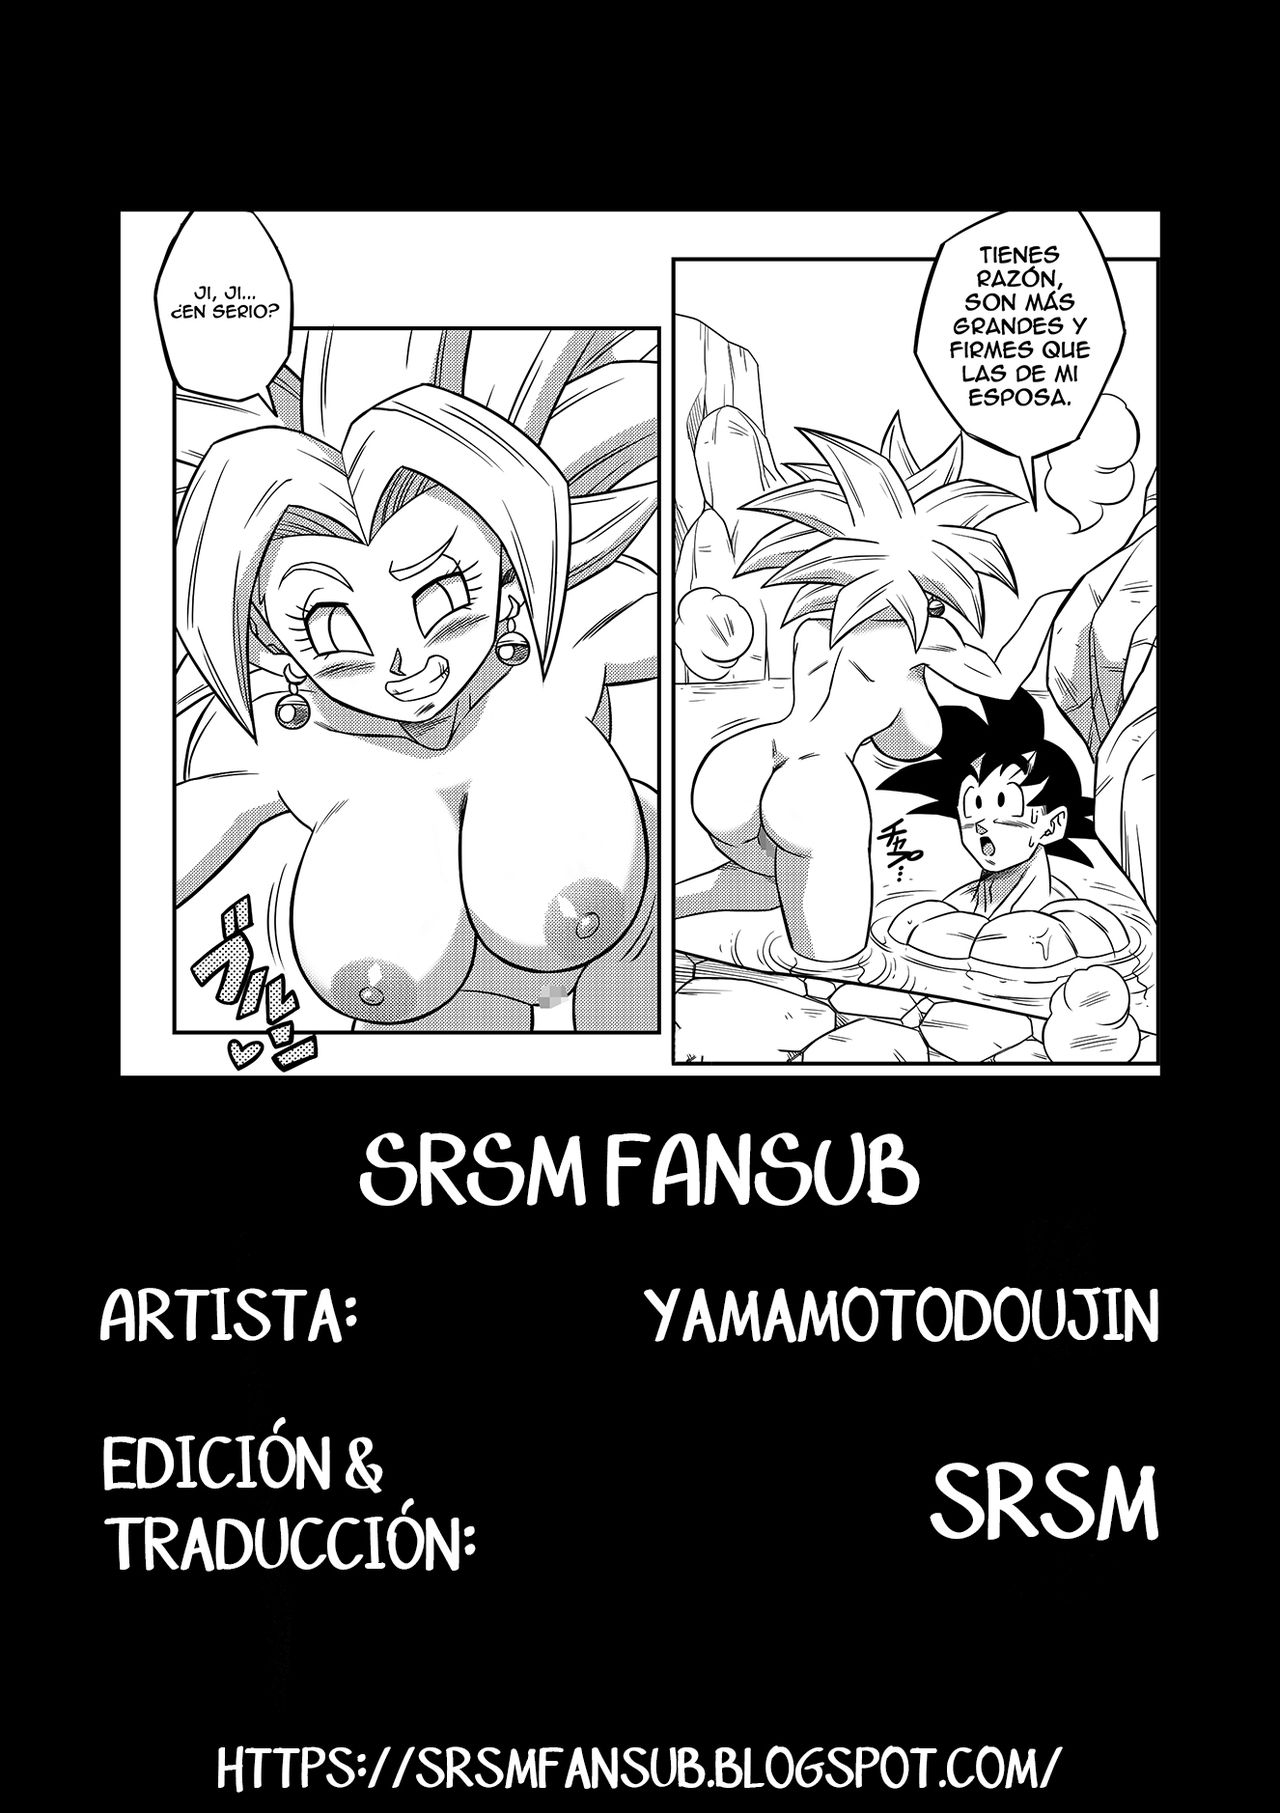 [Yamamoto] ¡¡¡Pelea en el 6to Universo!!! (Dragon Ball Super) [Spanish] [SRSM] 28